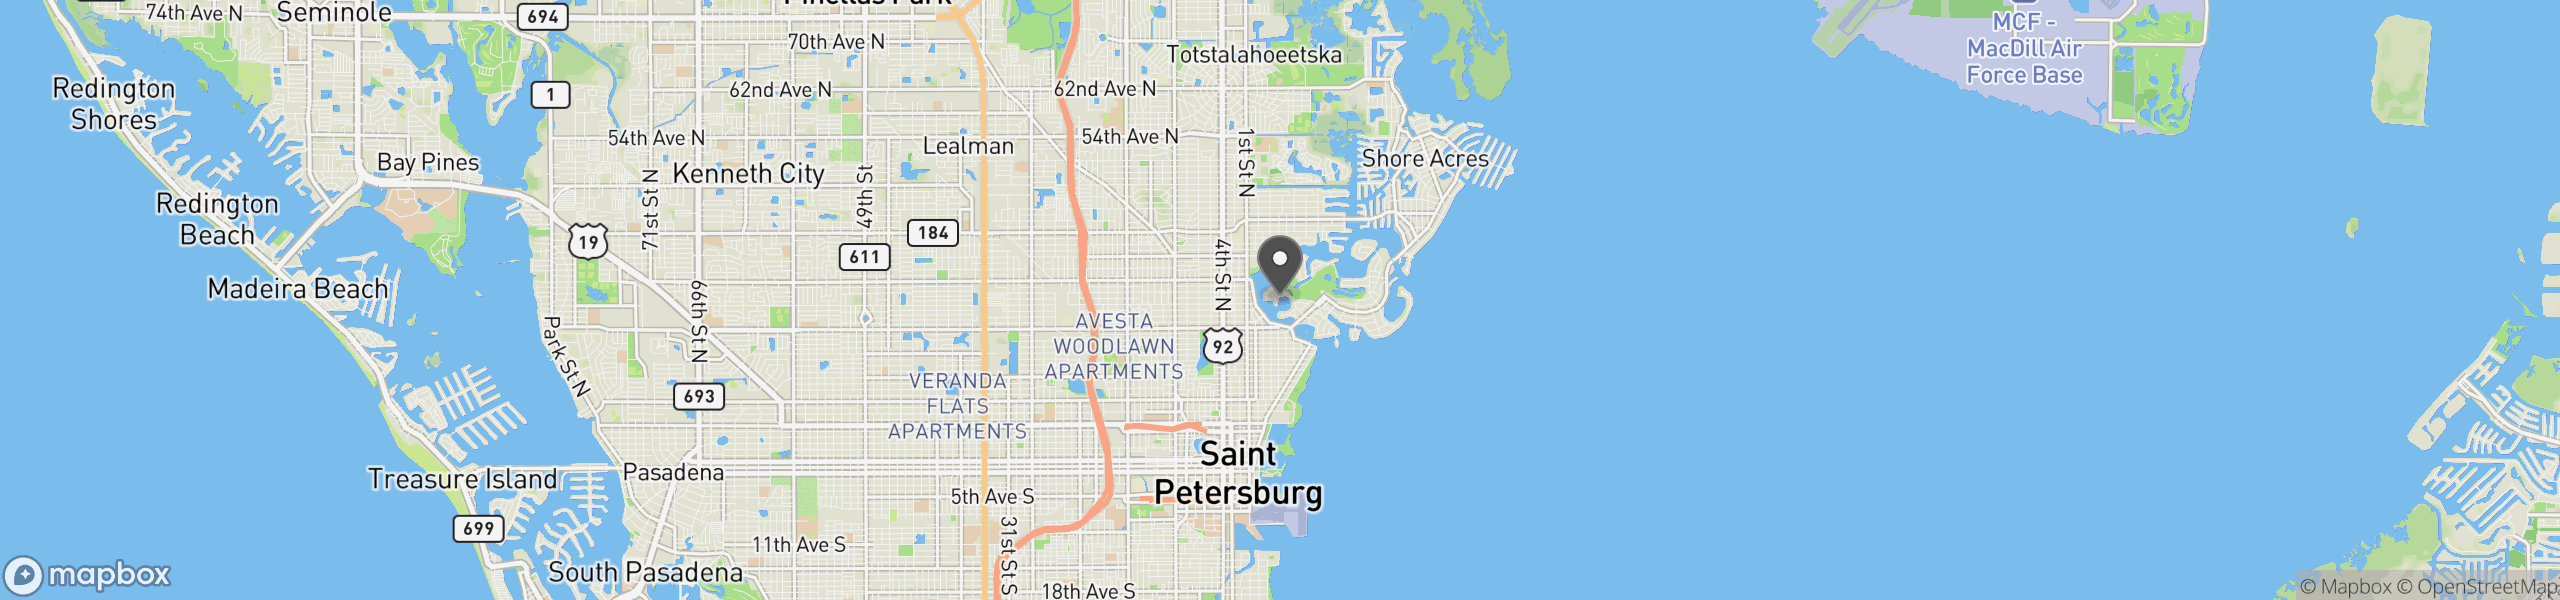 Saint Petersburg, FL 33704